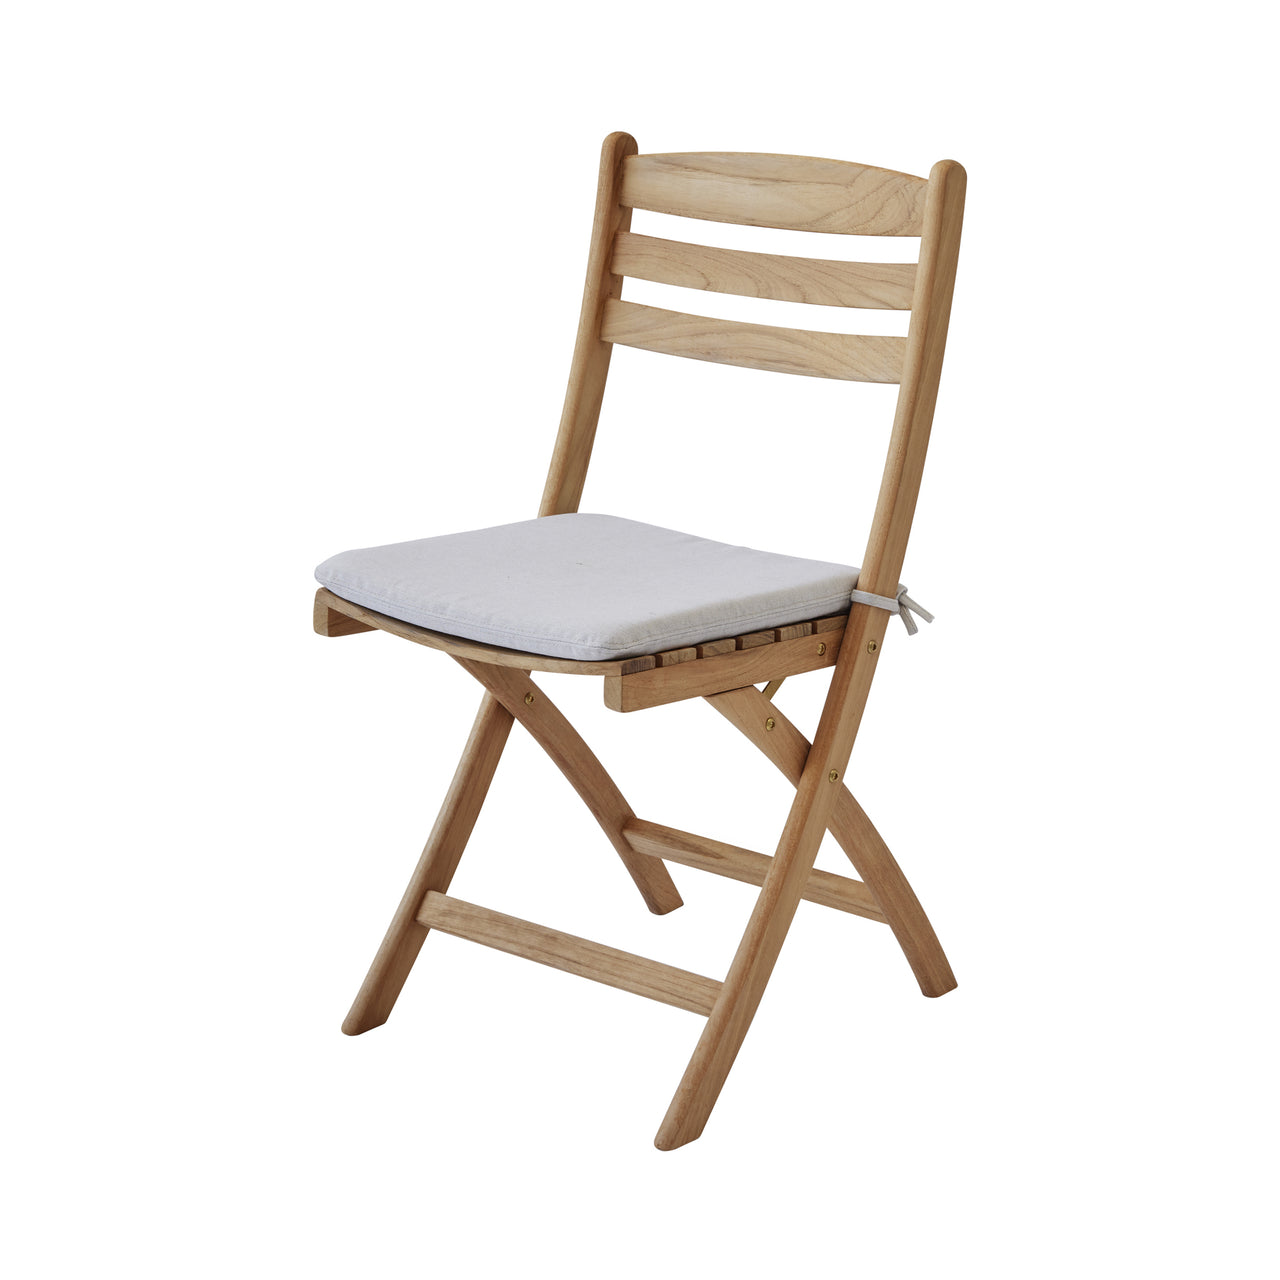 Selandia Chair: With Papyrus Cushion